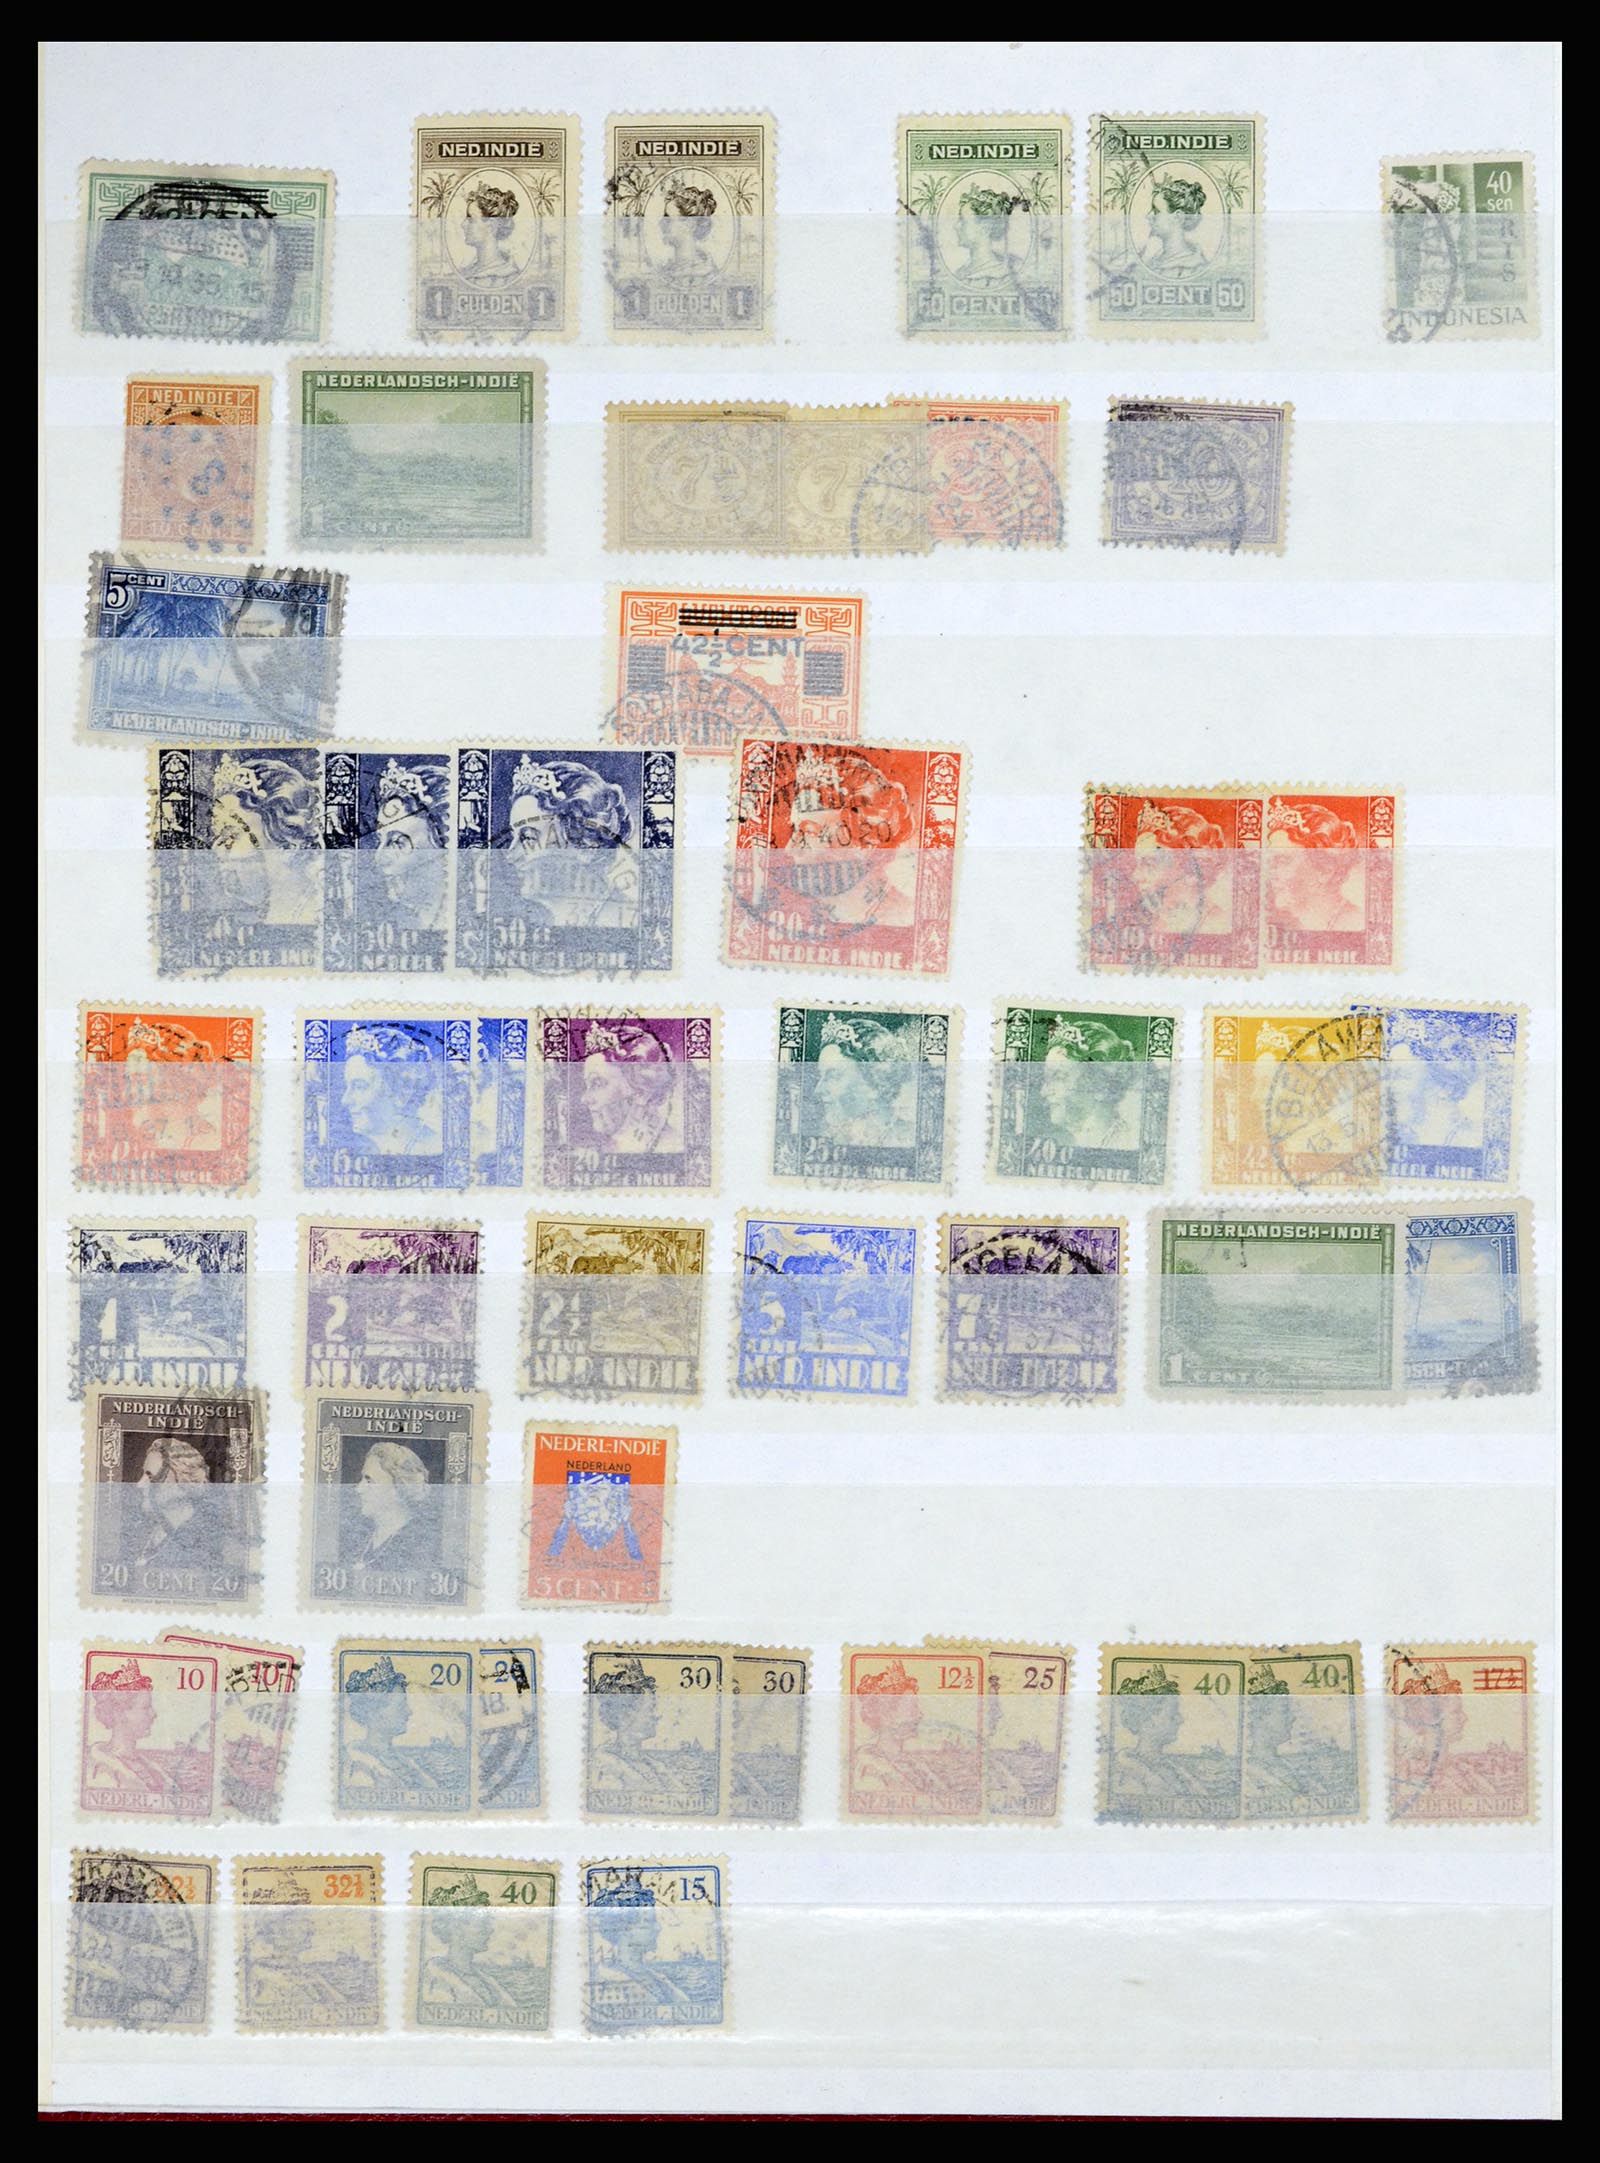 36838 087 - Stamp collection 36838 Netherlands sheet margin specialties 1906-1948.